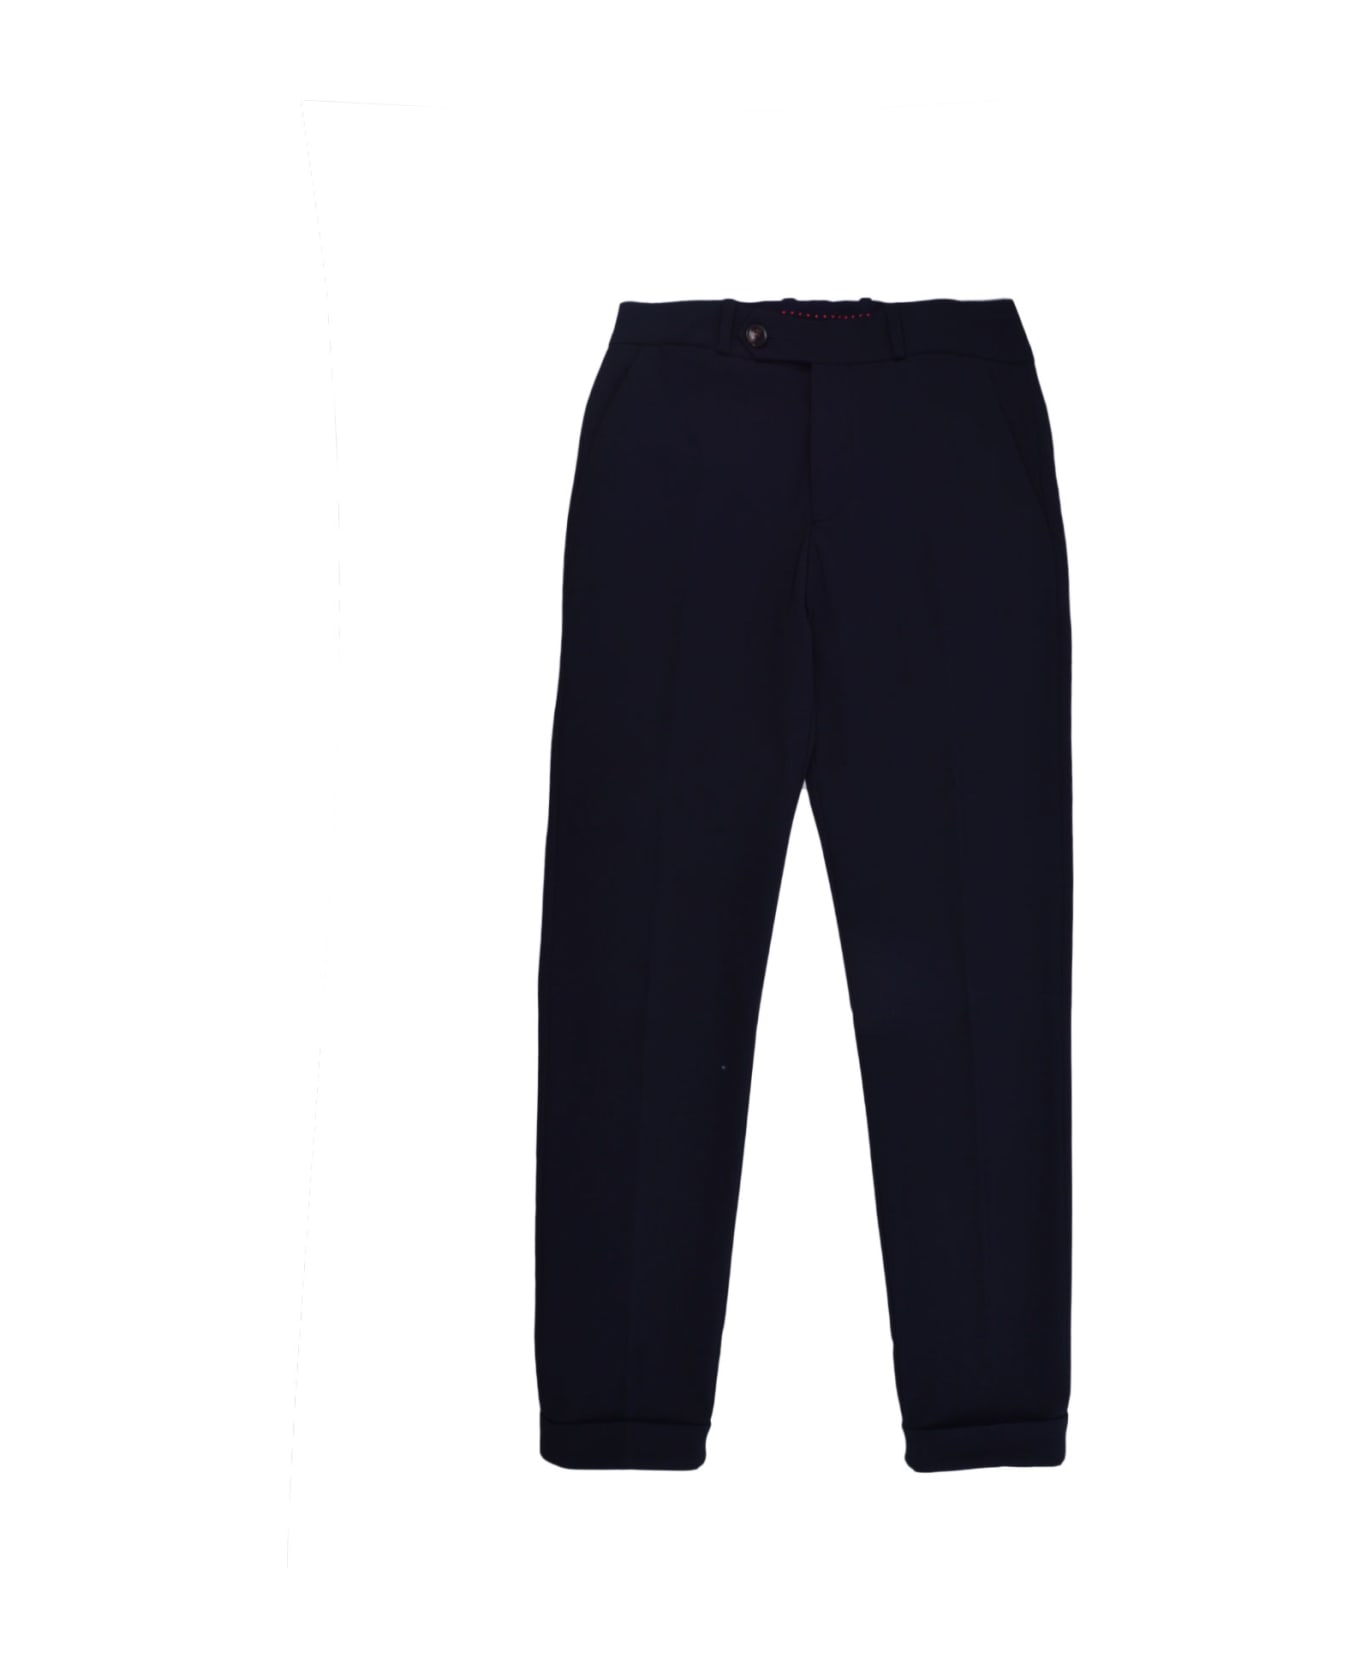 RRD - Roberto Ricci Design Pants Pants - BLUE BLACK スウェットパンツ